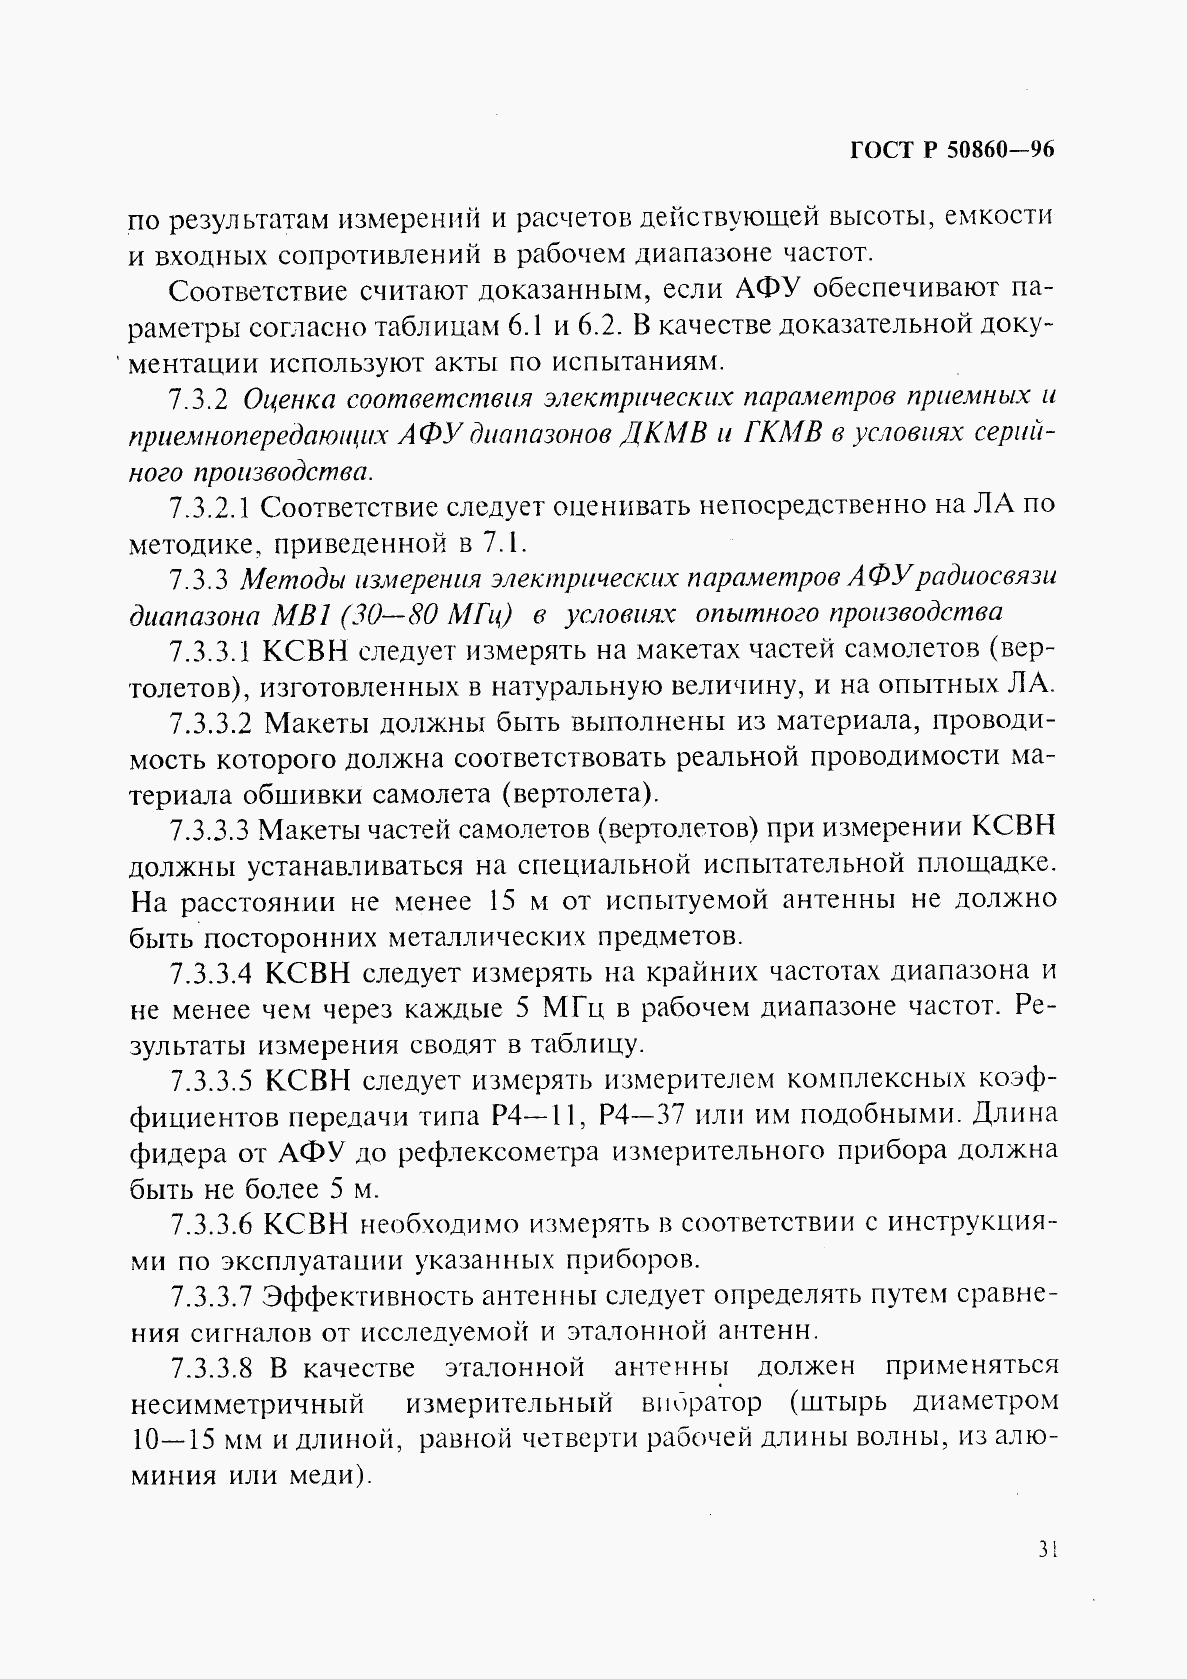 ГОСТ Р 50860-96, страница 36